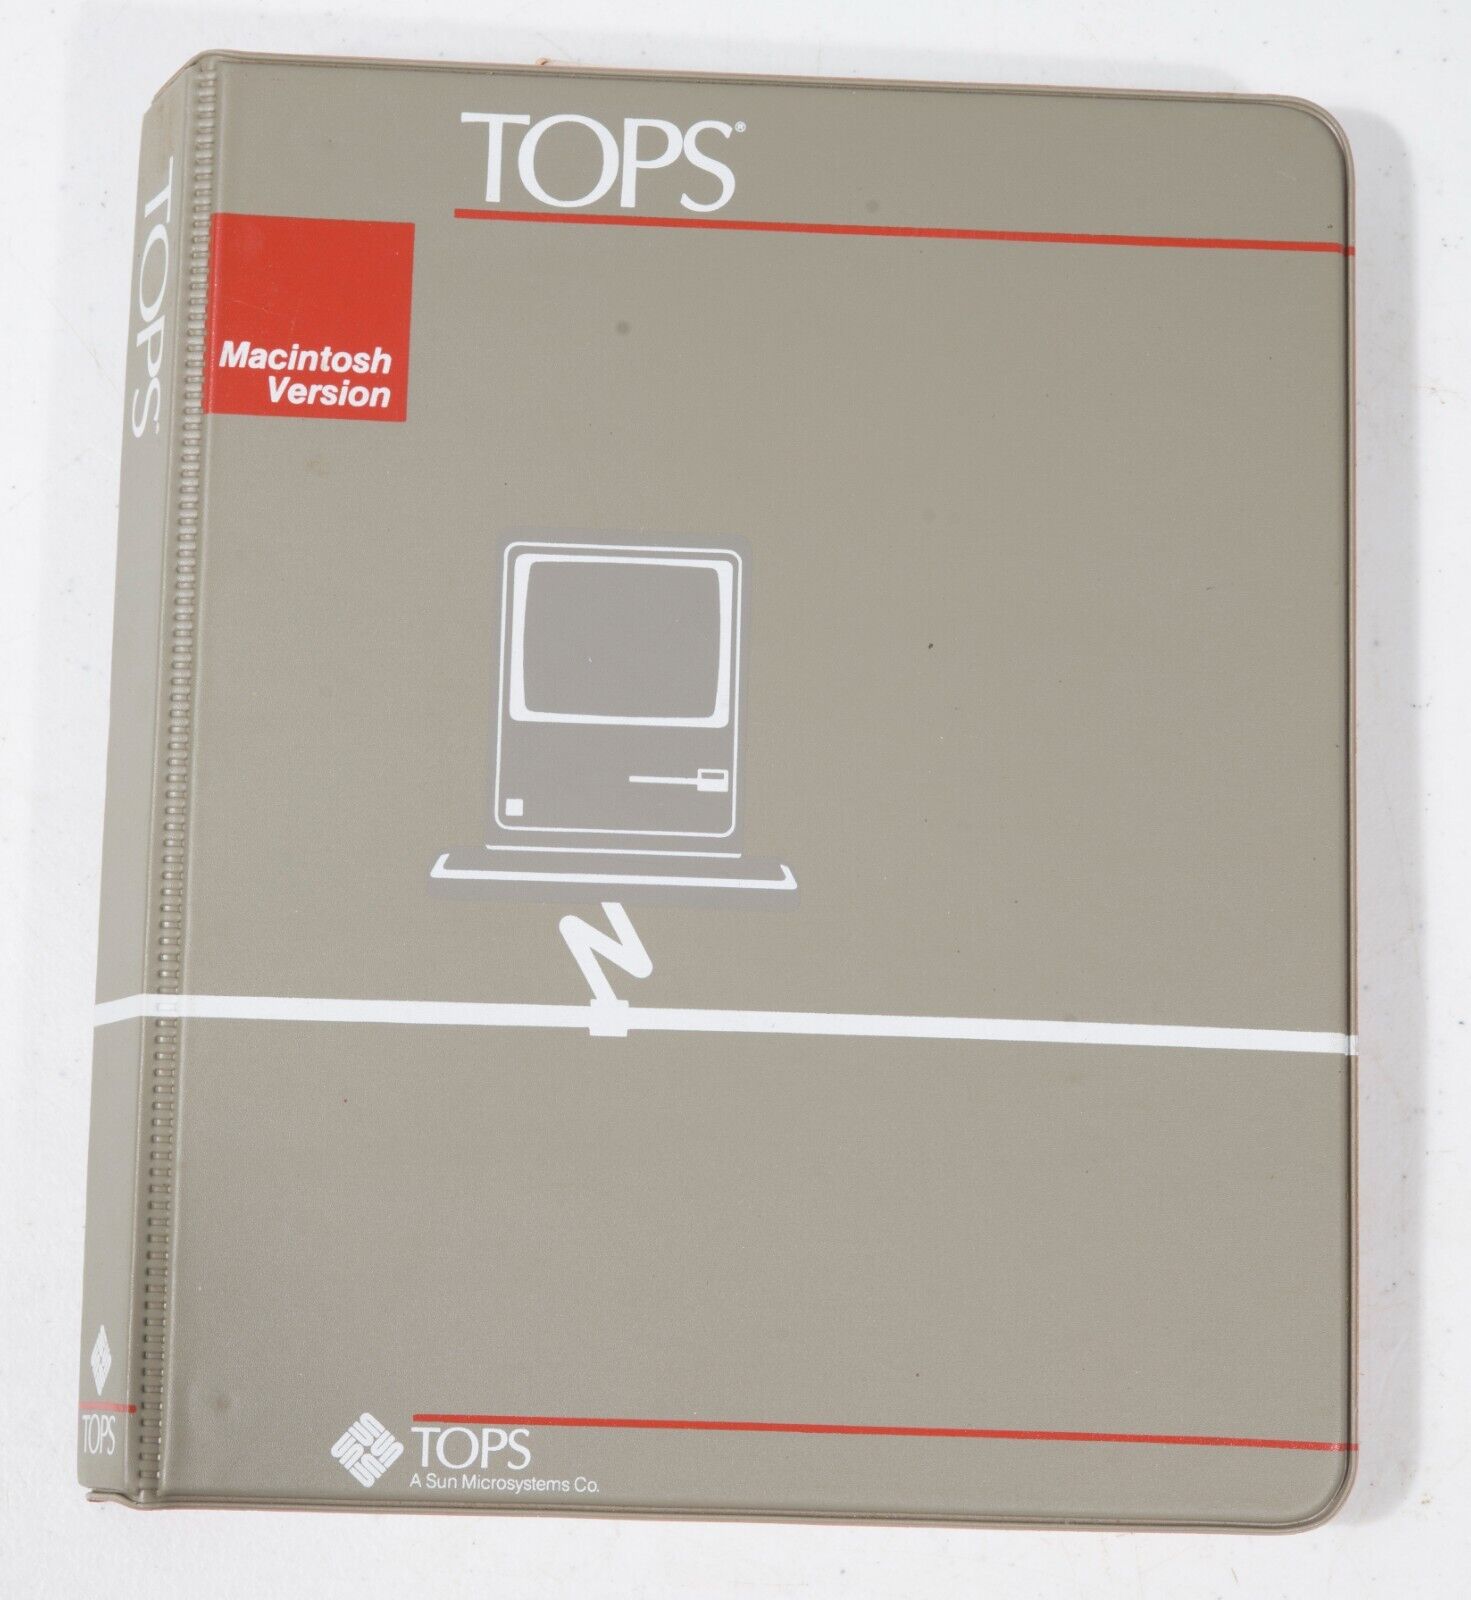 Vintage Sun TOPS Macintosh Version ST533